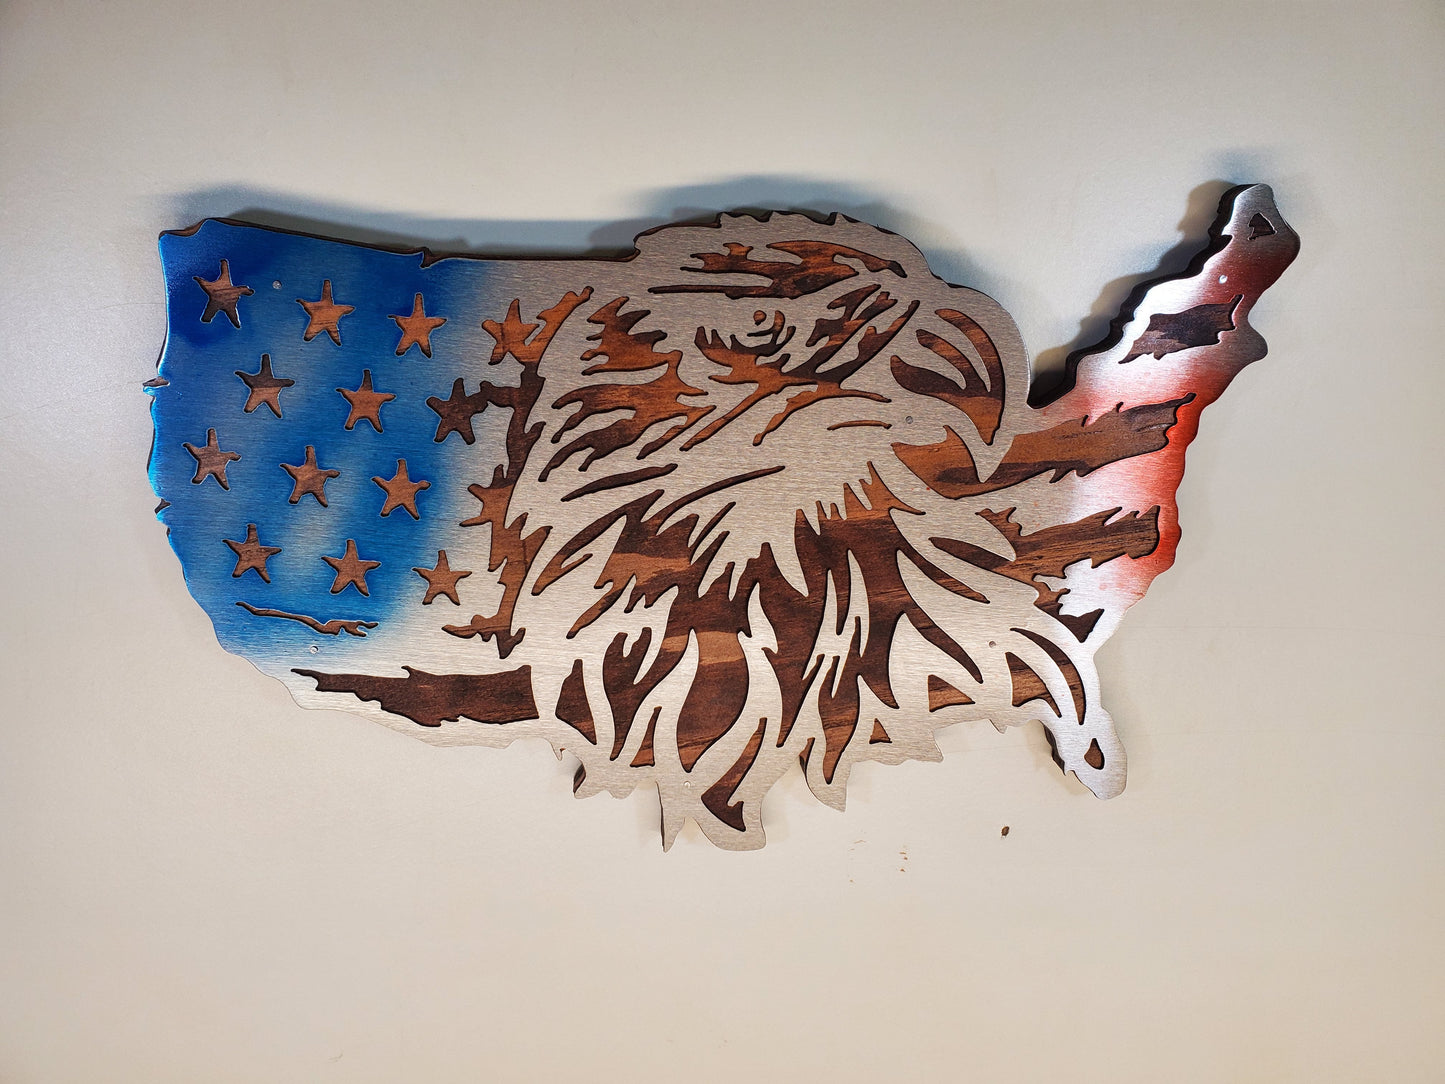 United States Flag with Eagle Metal Art on Wood